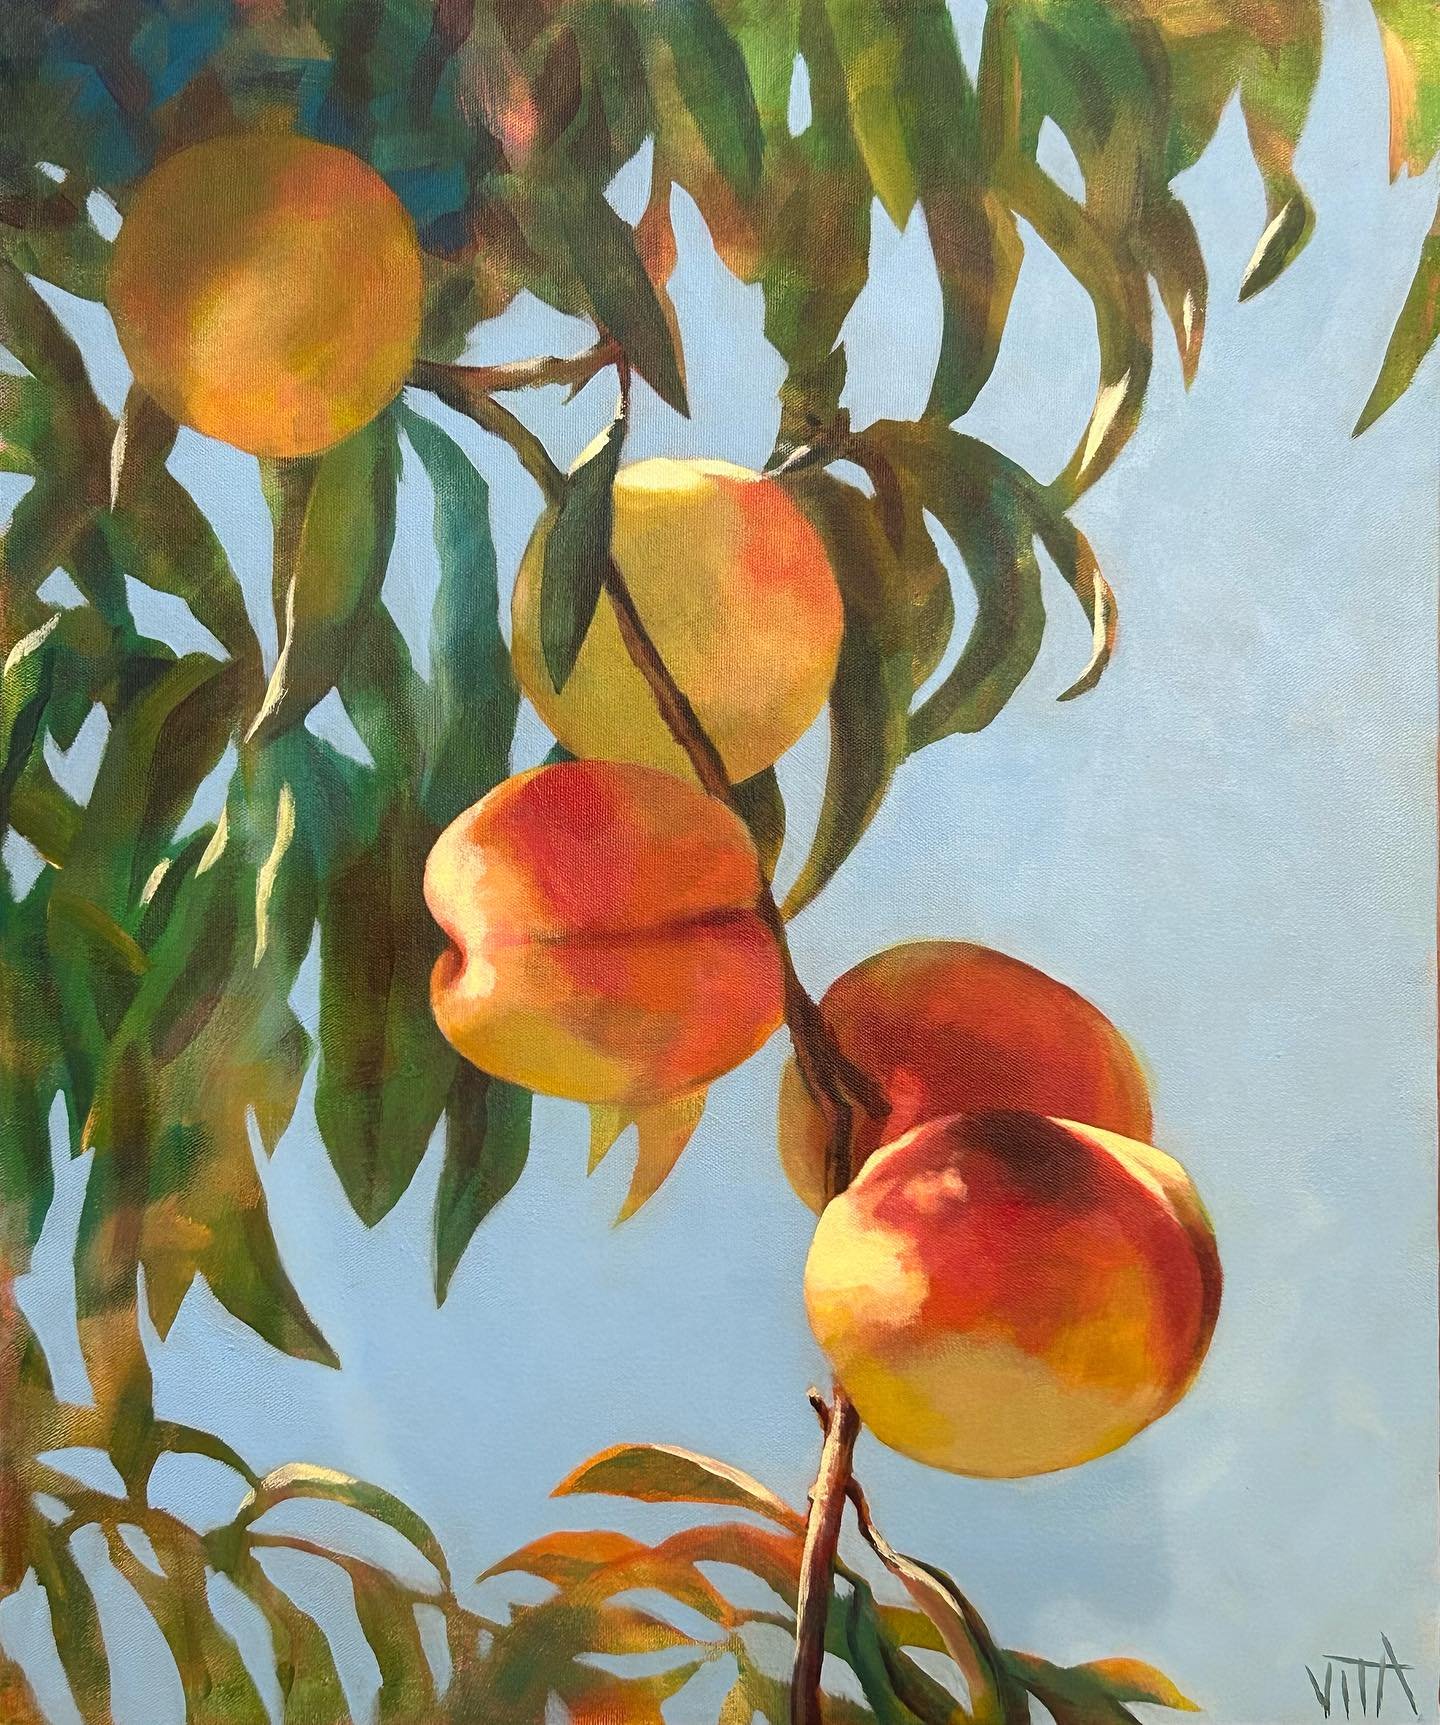 Sold, Peachy Keen, Acrylic on Canvas, 18" x 24" Copyright 2023 Hirschten